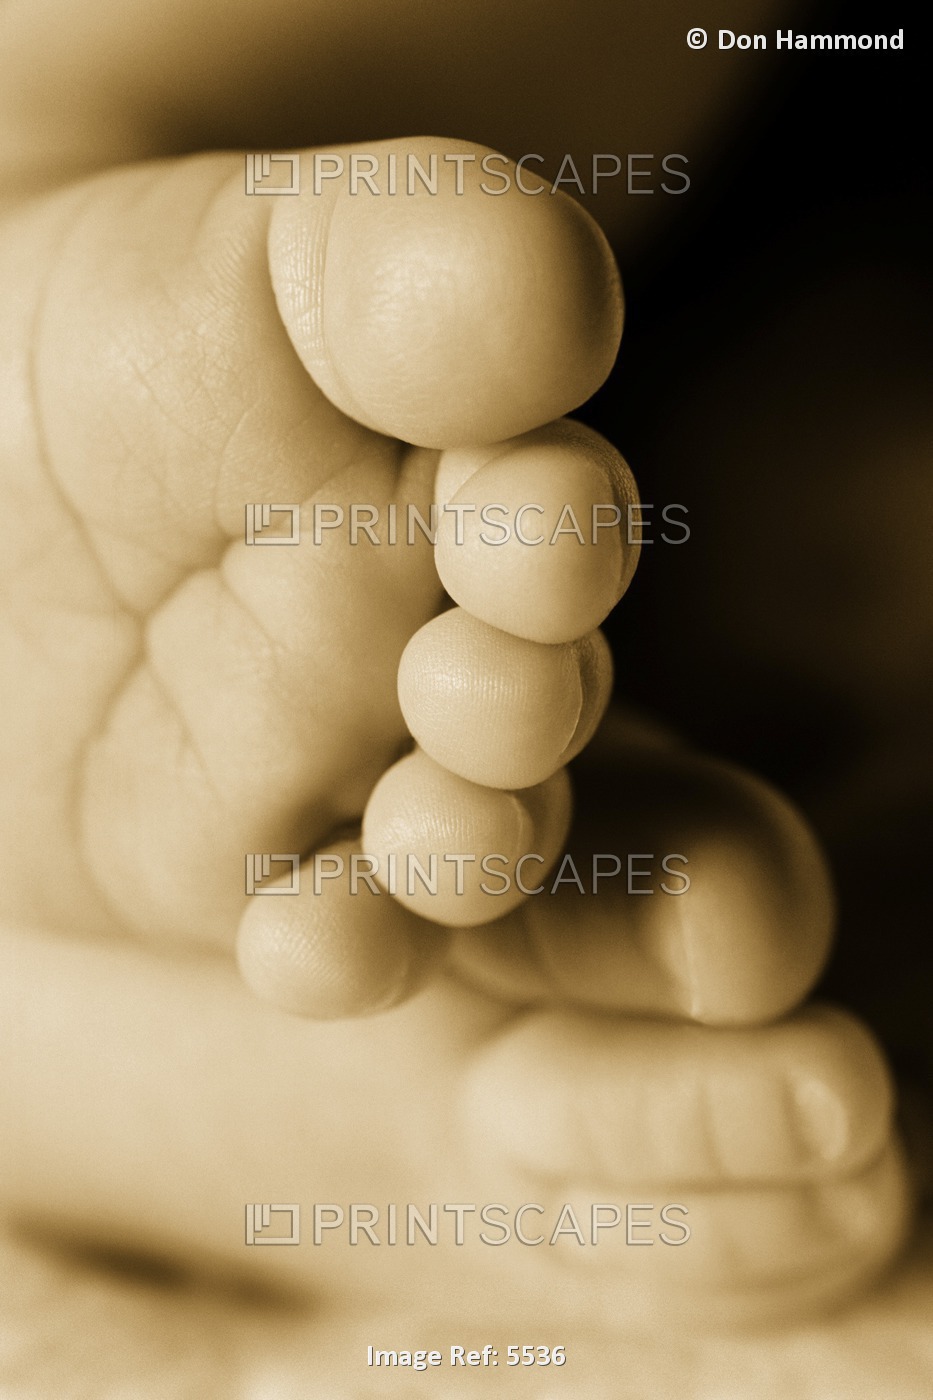 A Baby's Feet